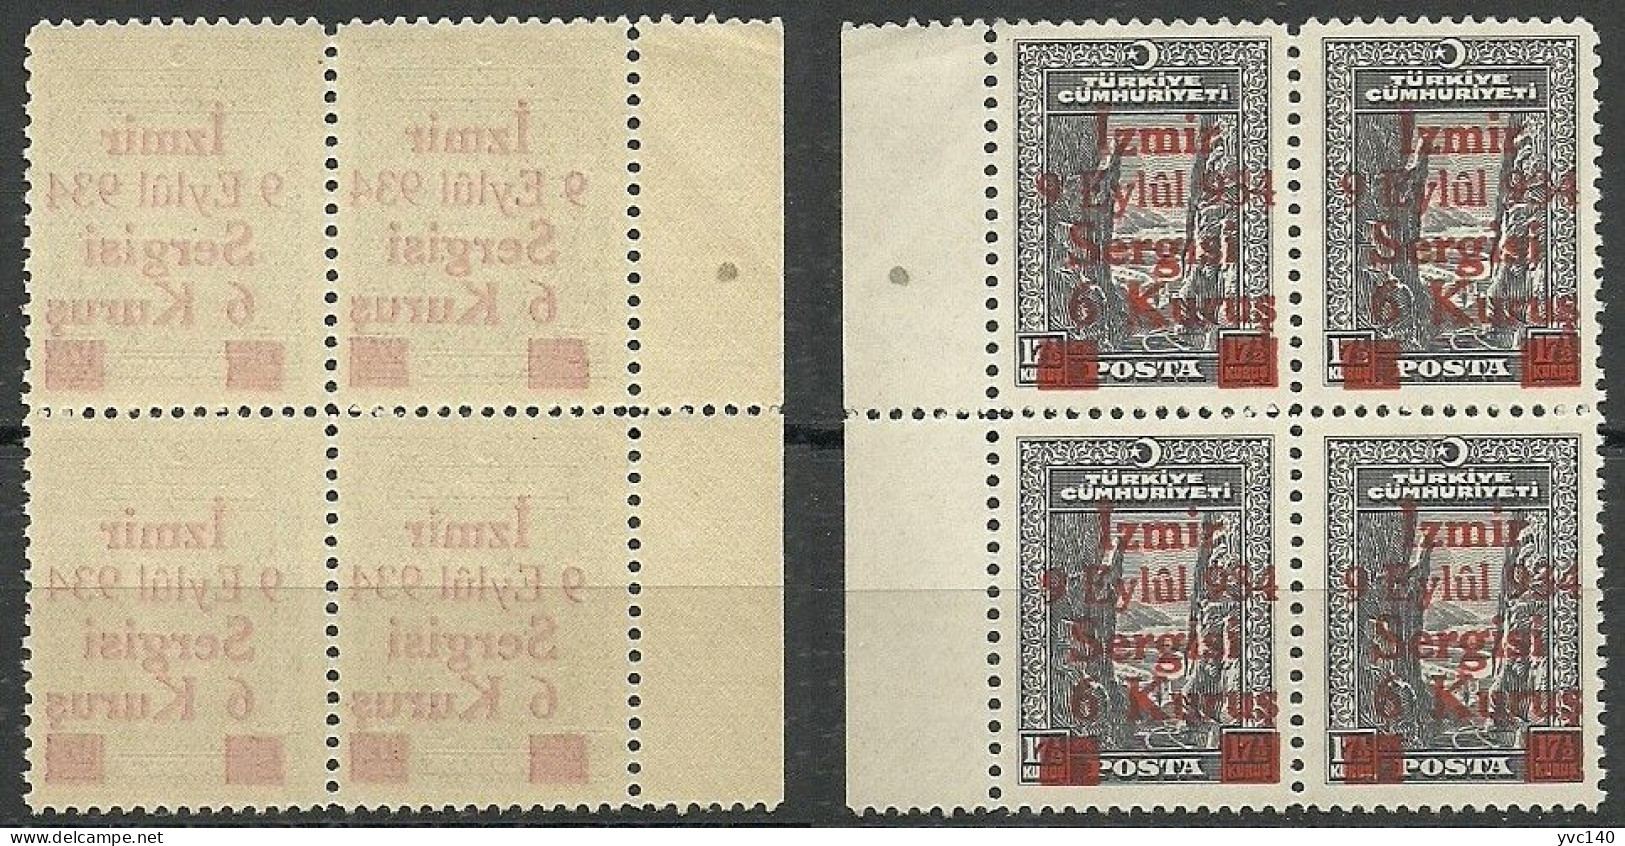 Turkey; 1934 Surcharged Commemorative Stamp For Smyrna Fair "Abklatsch" ERROR (Block Of 4) - Unused Stamps